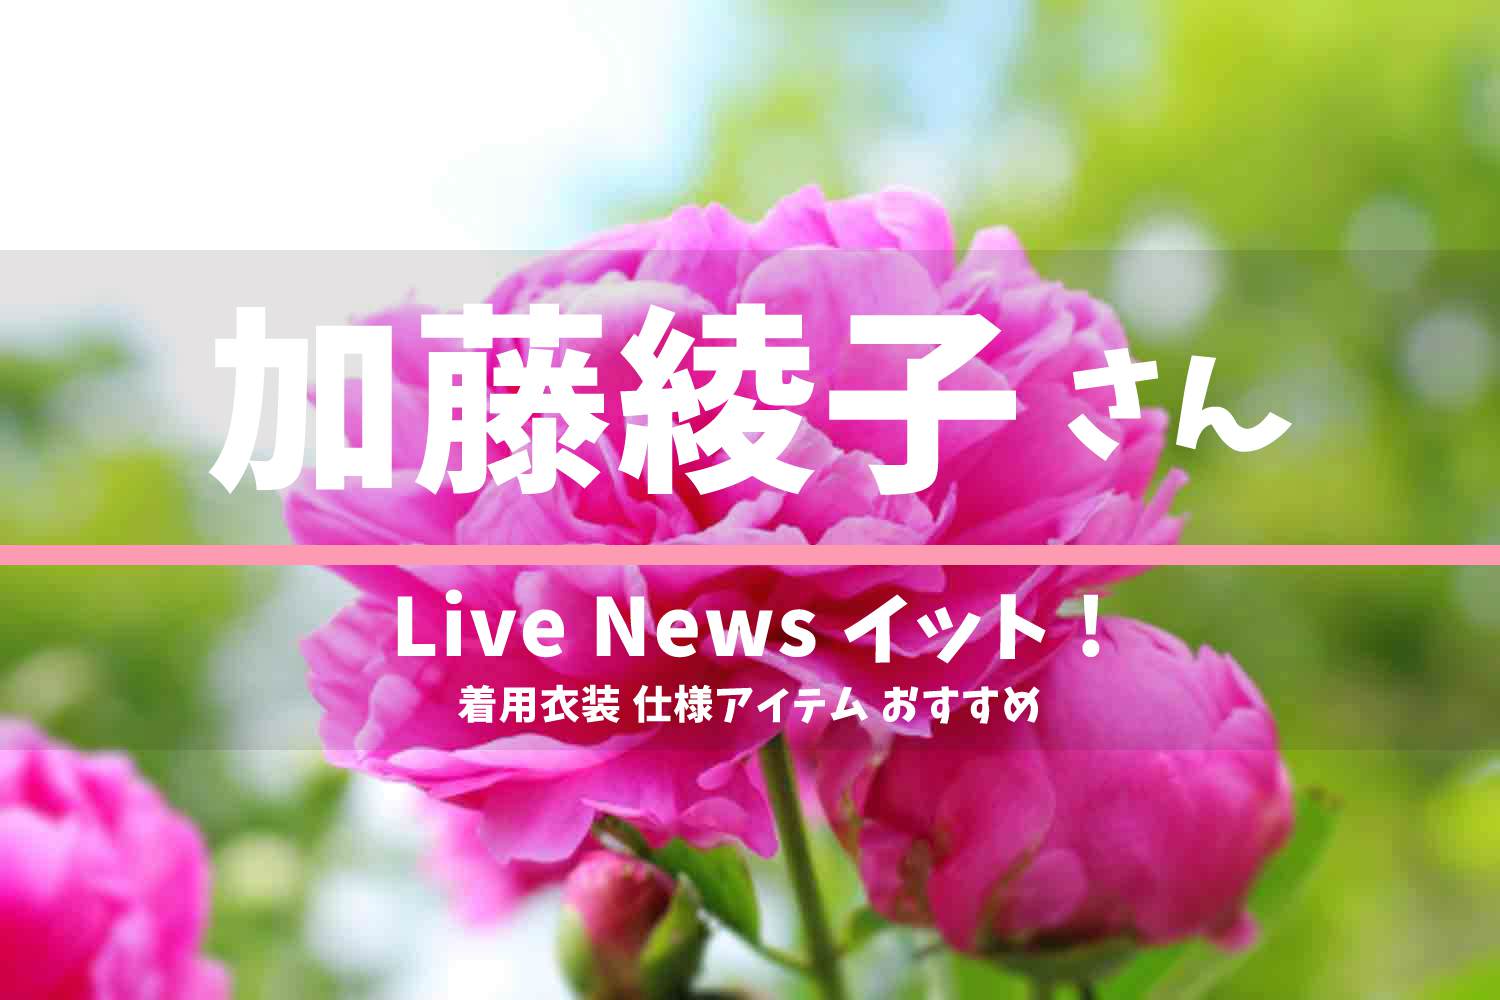 Live News イット! 加藤綾子さん 番組 衣装 2022年7月28日放送